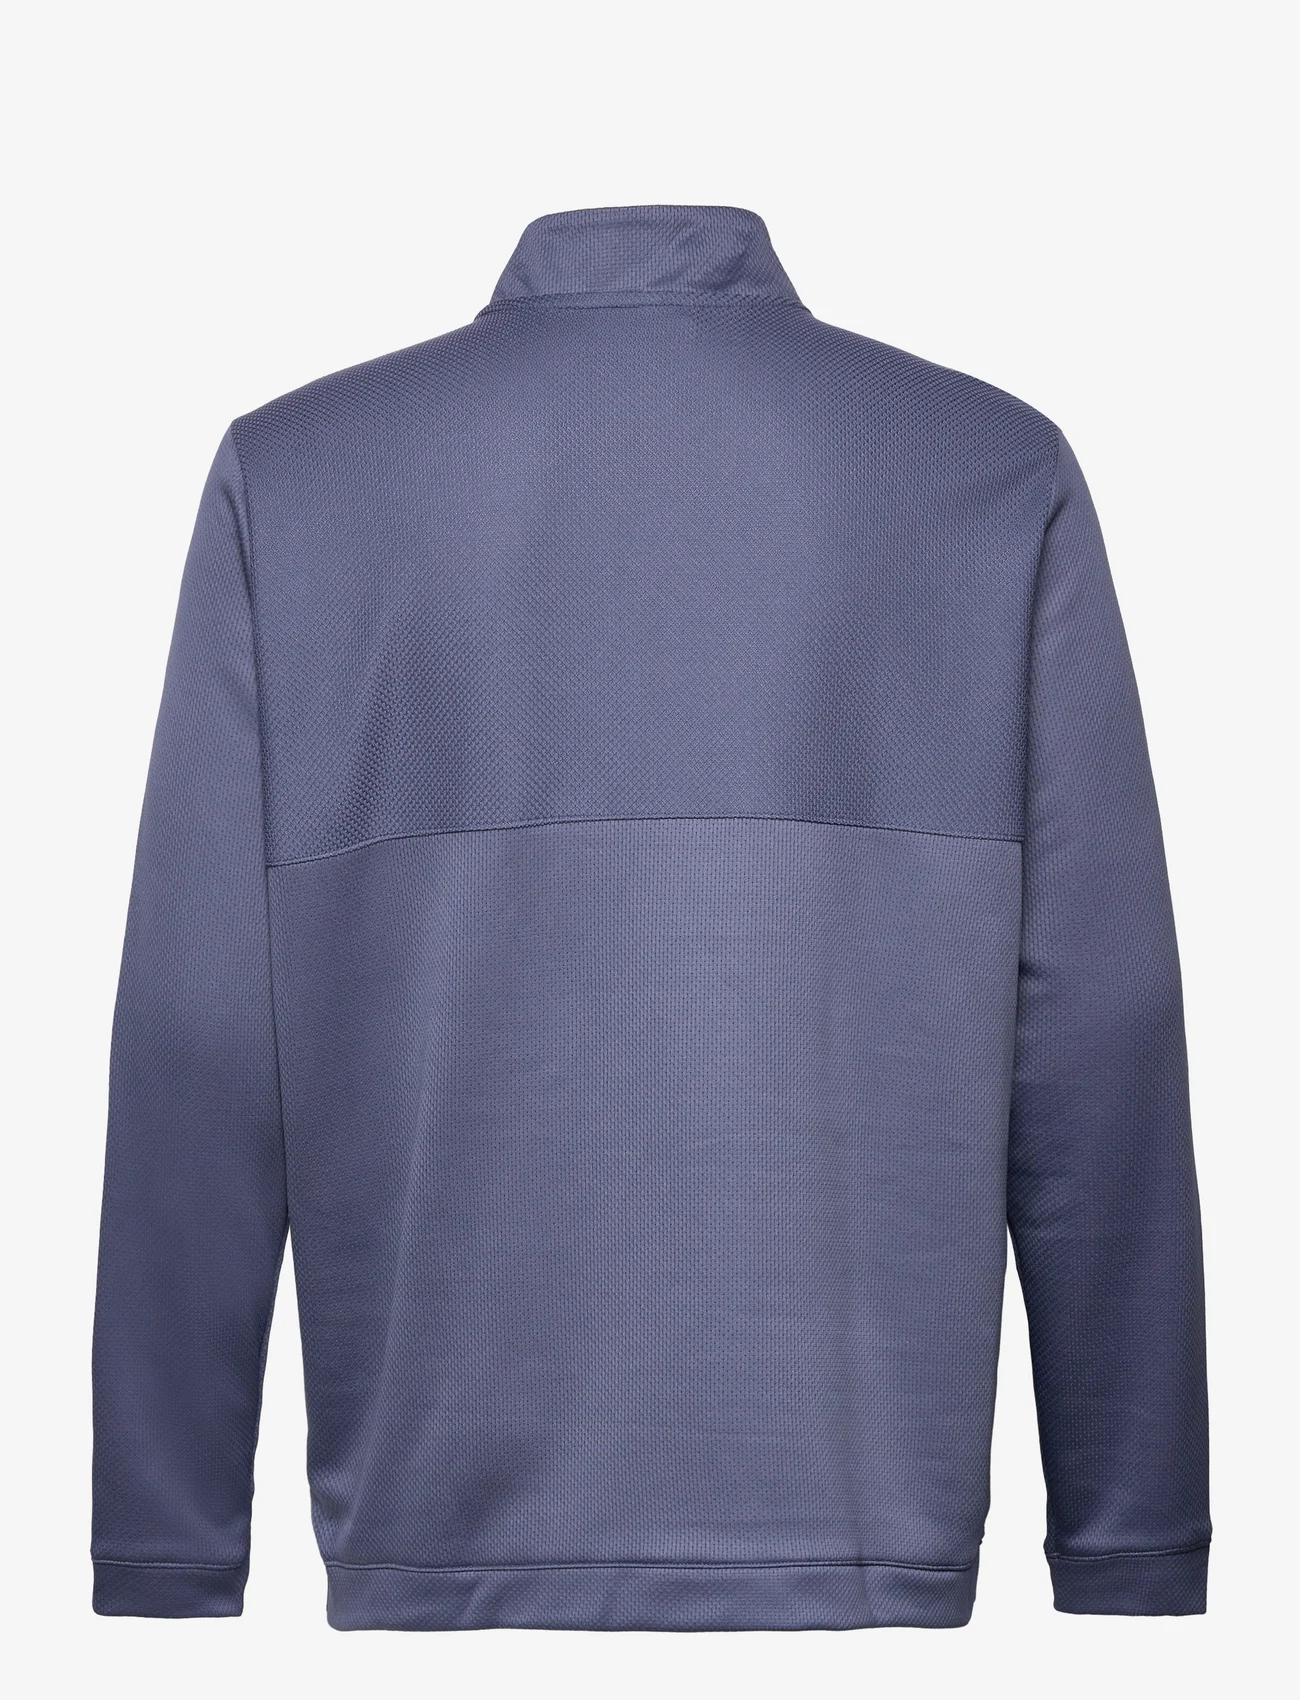 adidas Golf - TEXTURED Q ZIP - sweaters - prloin - 1